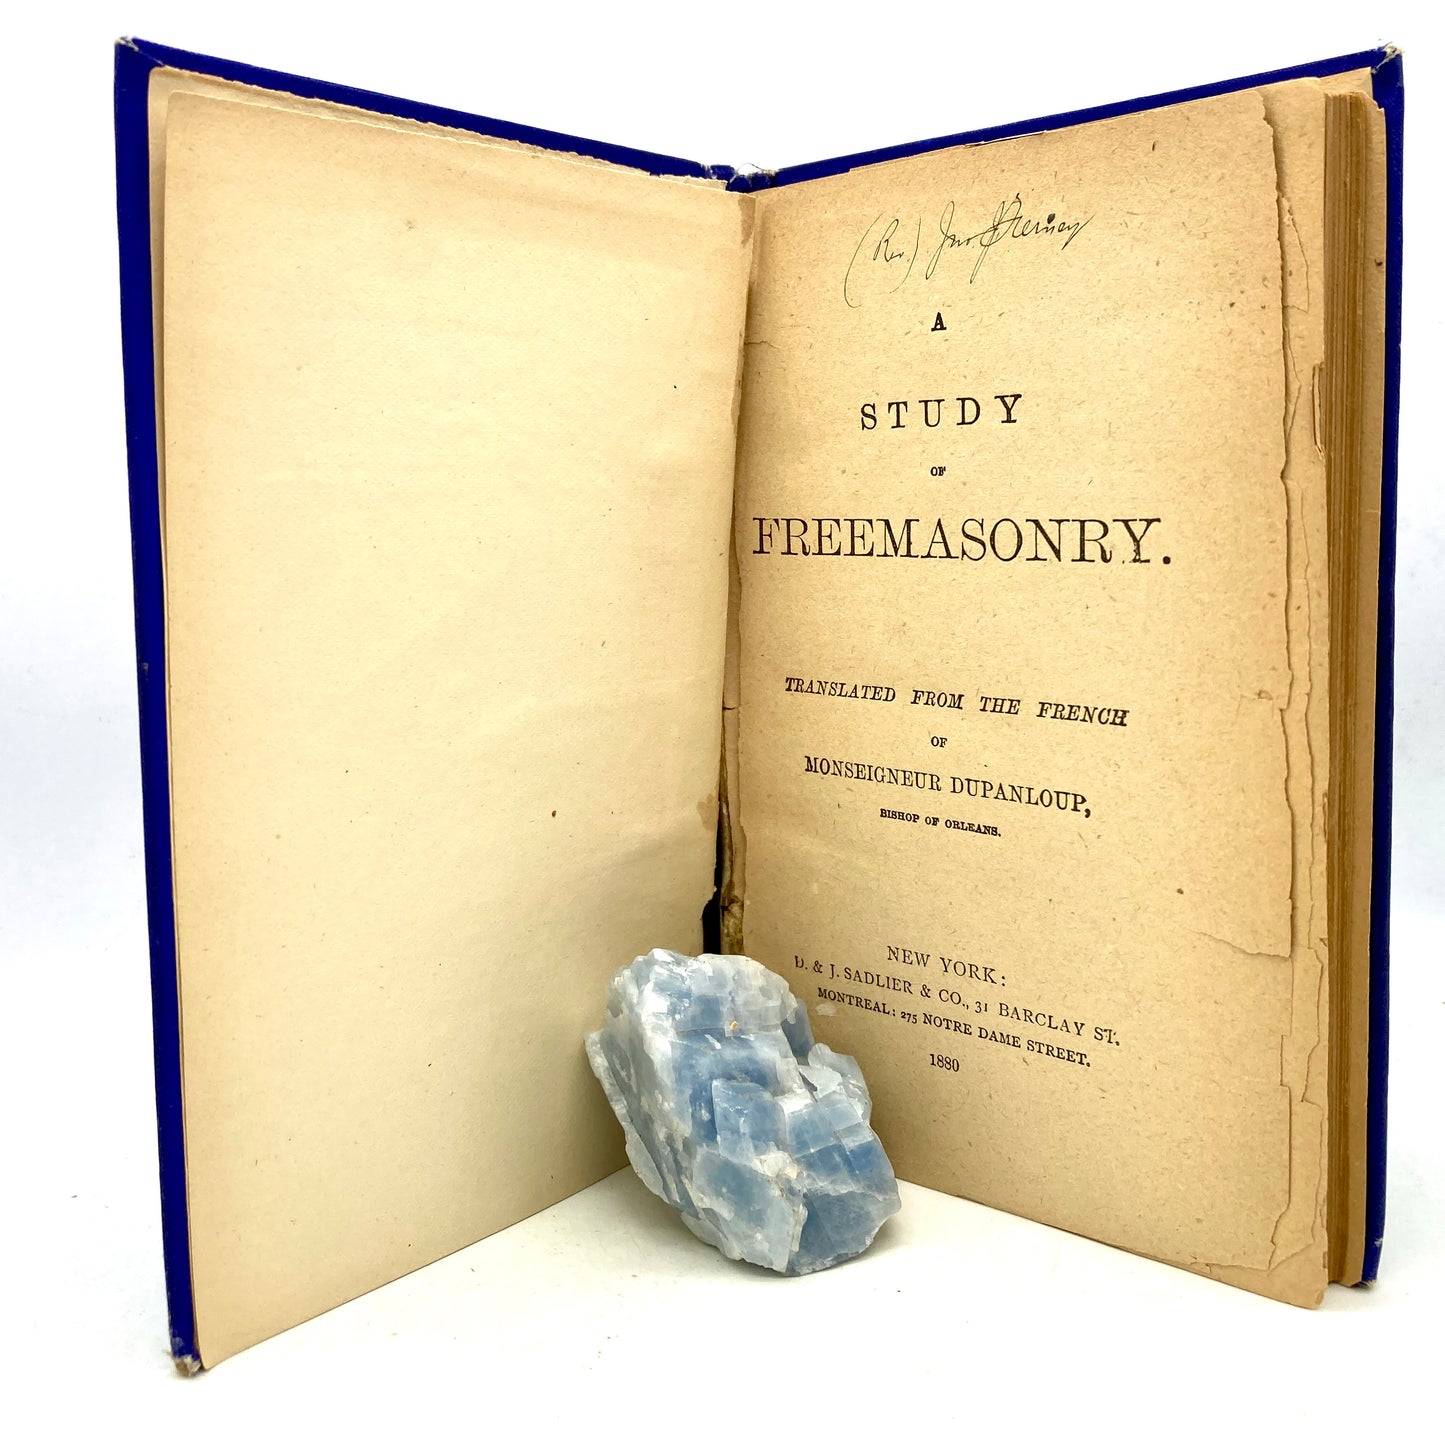 DUPANLOUP, Monseigneur "A Study of Freemasonry" [D & J Sadlier & Co, 1880]